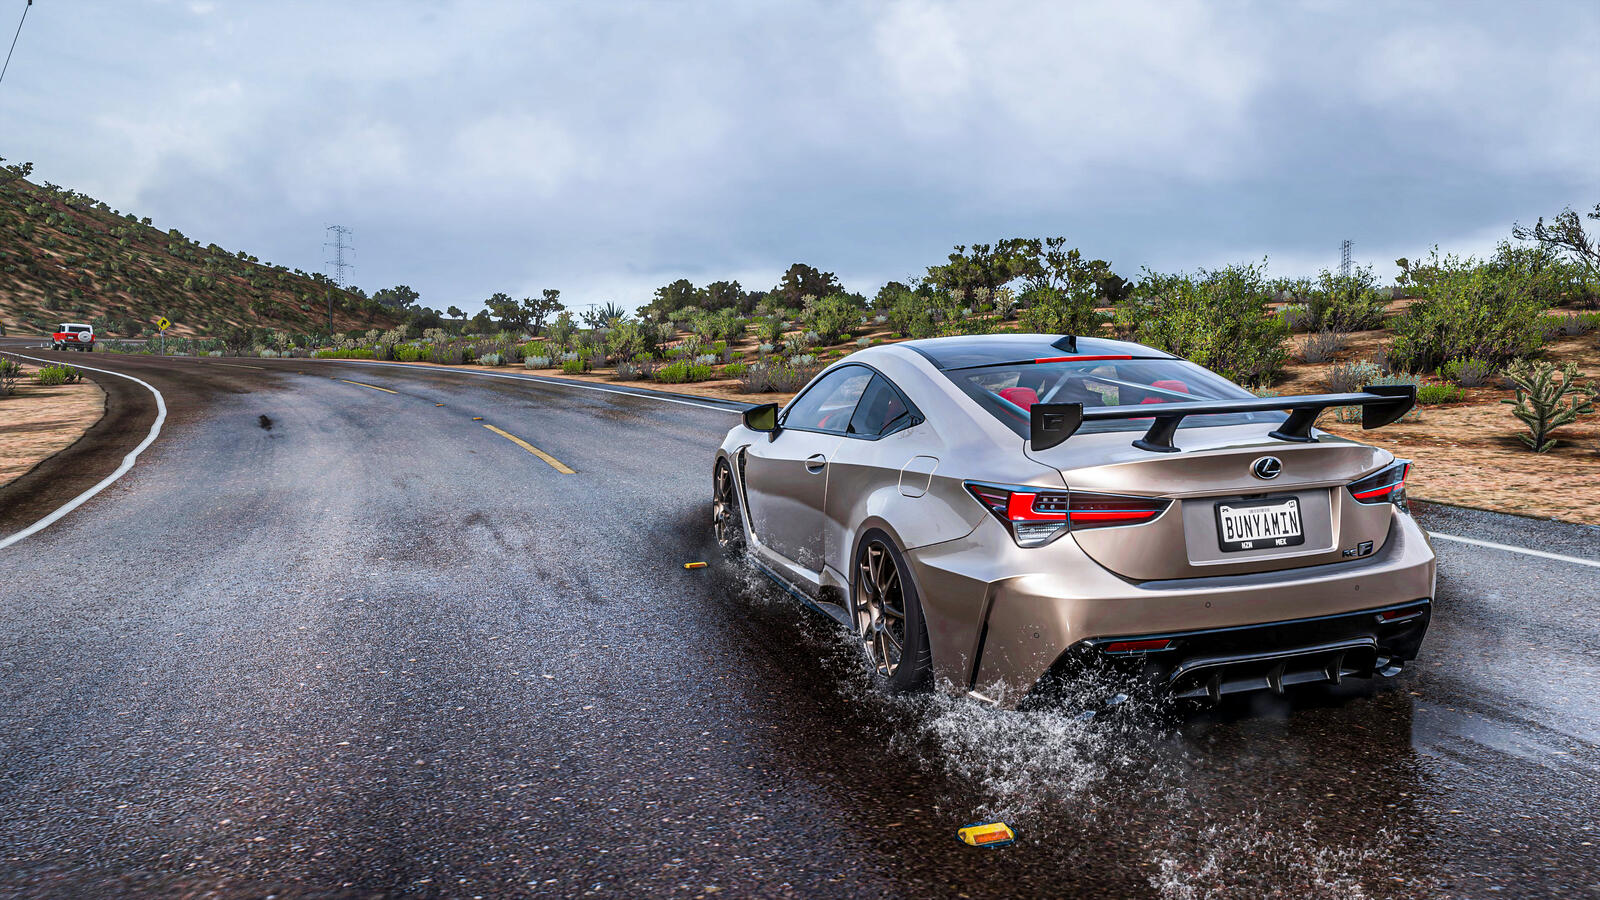 Free photo Lexus from the game Forza Horizon 5 in the rain